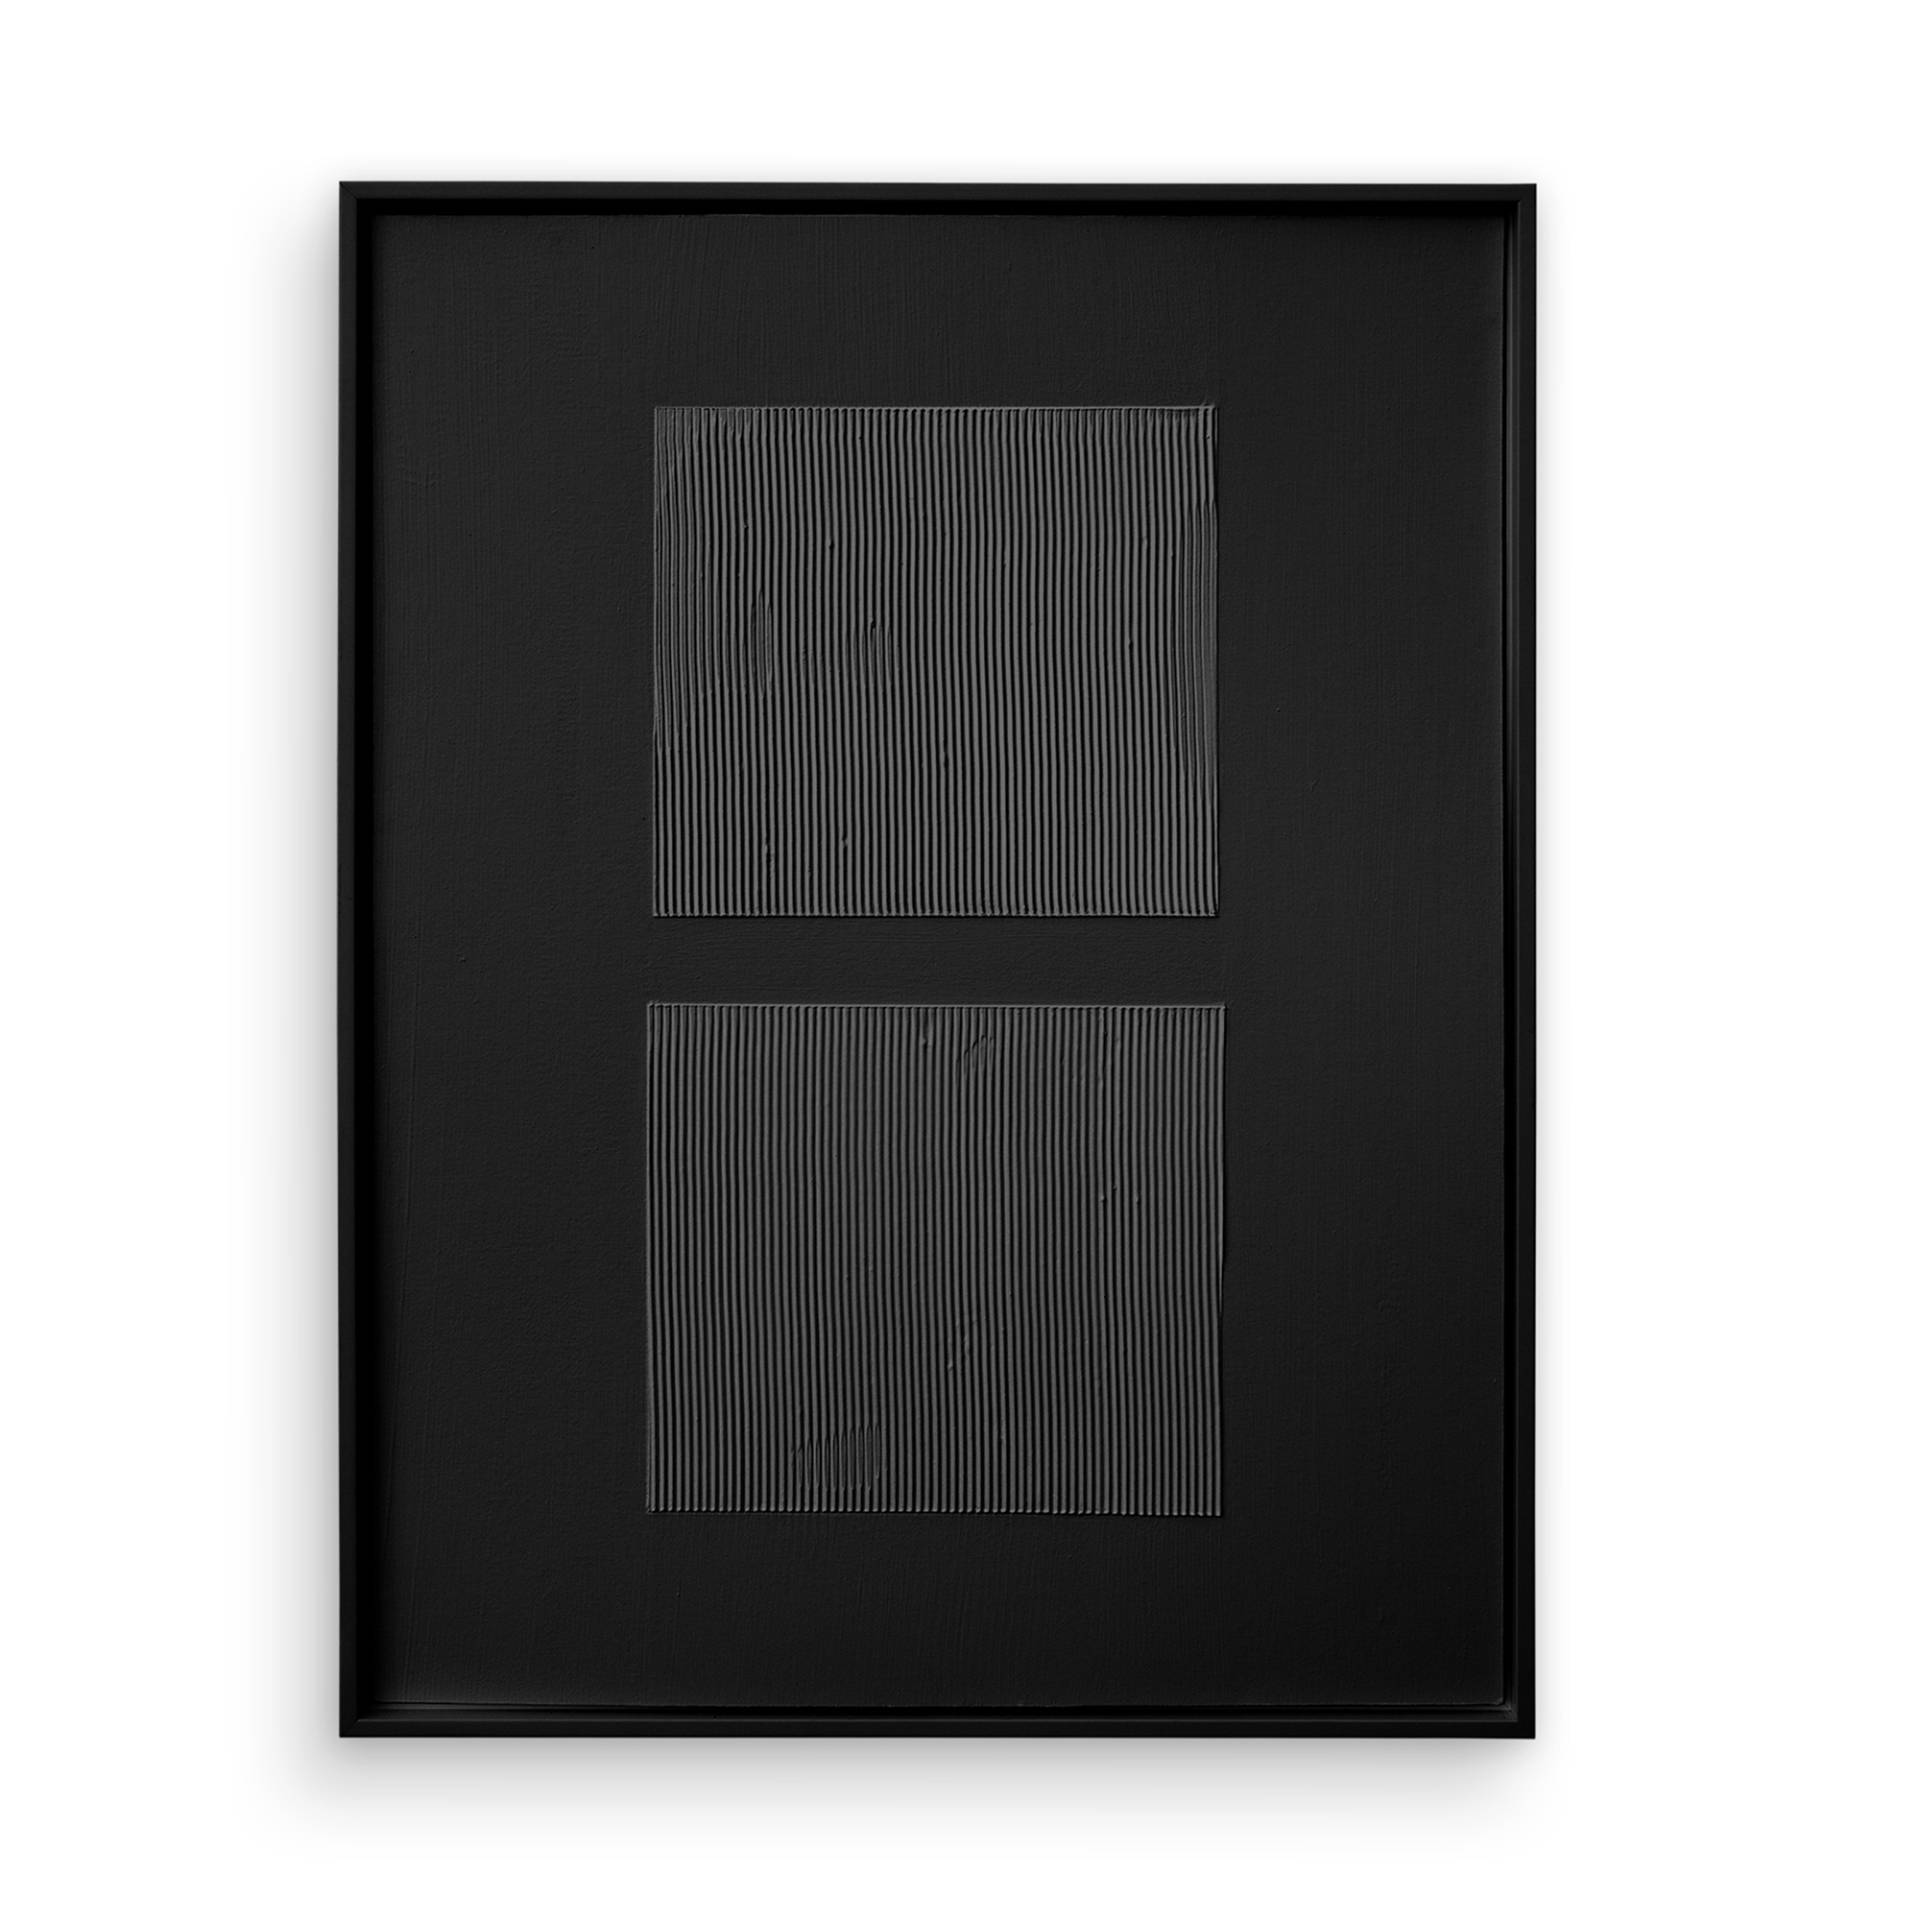 Studio Mykoda - SAHAVA Stripes 5 3D Wanddekoration 60x80cm - schwarz/Rahmen schwarz lasiert/BxH 60x80cm/Jedes Stück ein Unikat! von Studio Mykoda